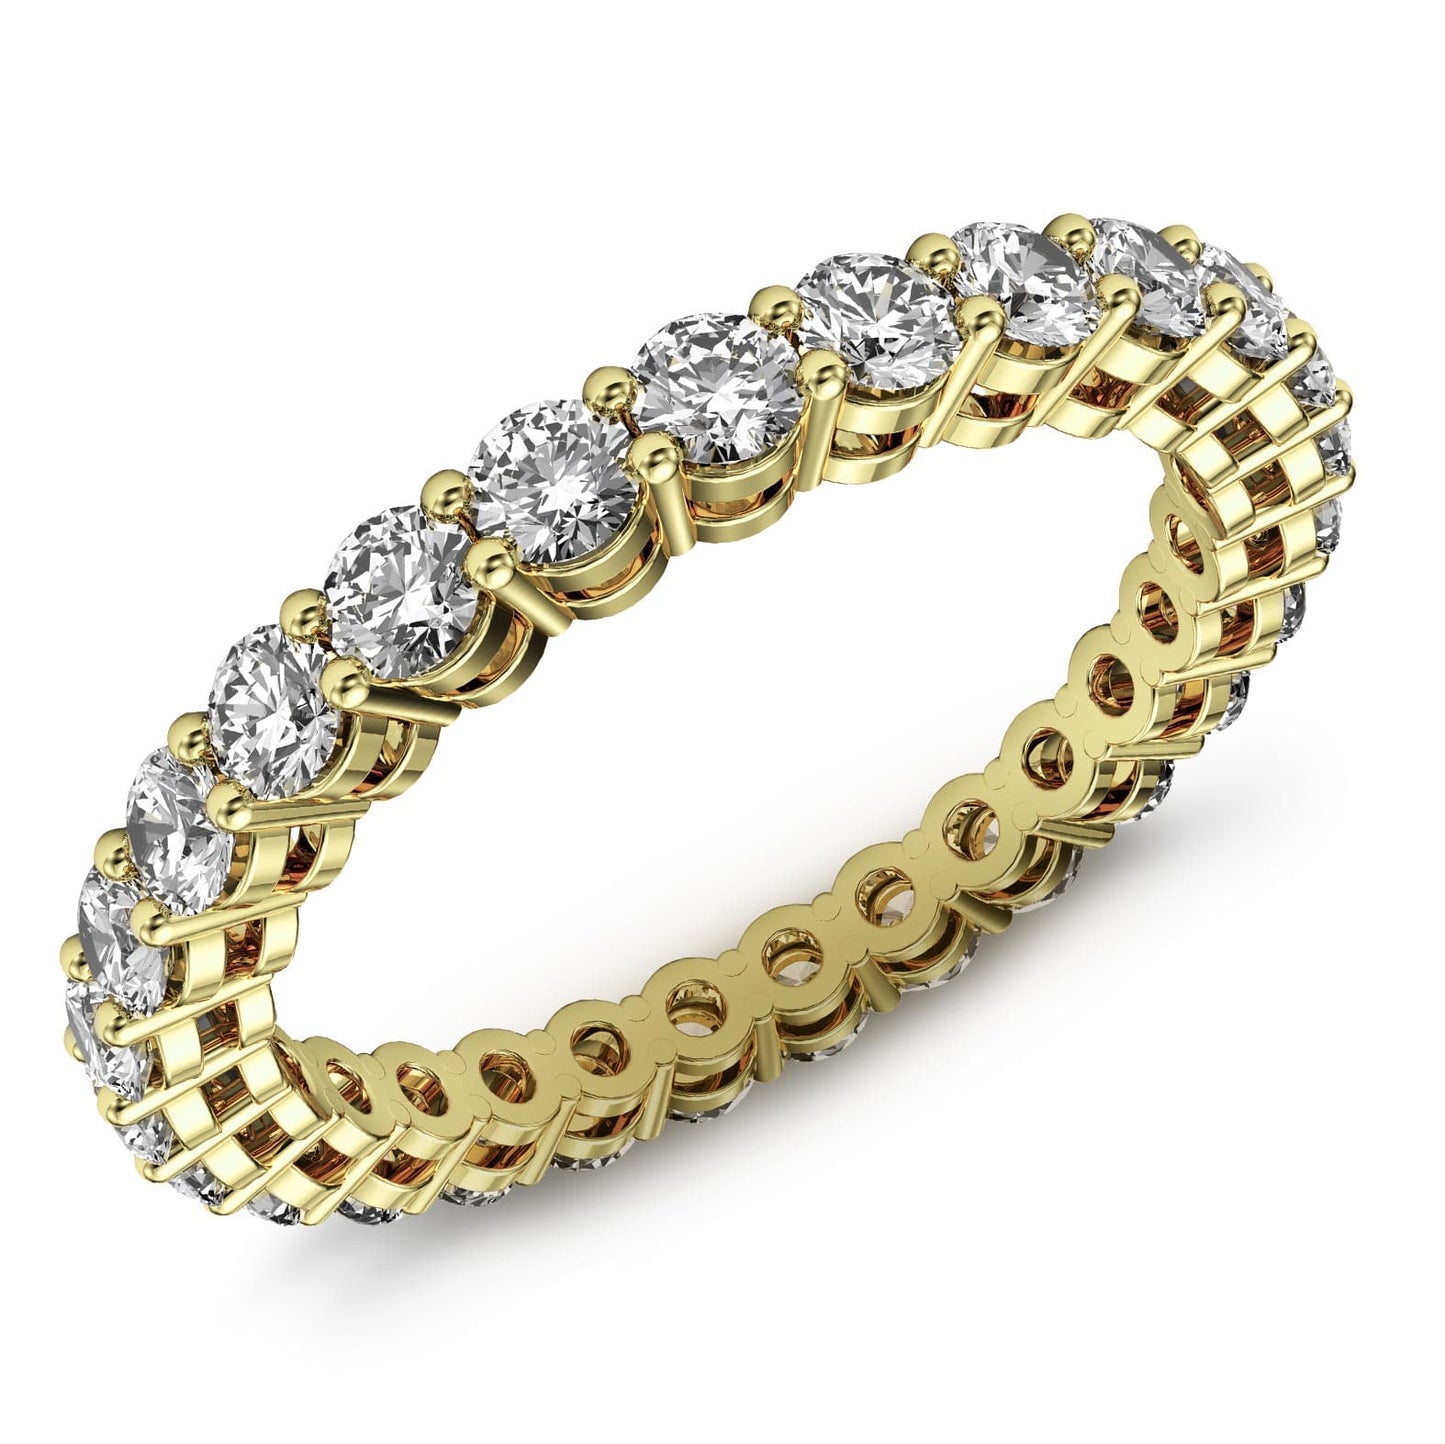 1ct Petite Diamond Eternity Ring in 14k Gold